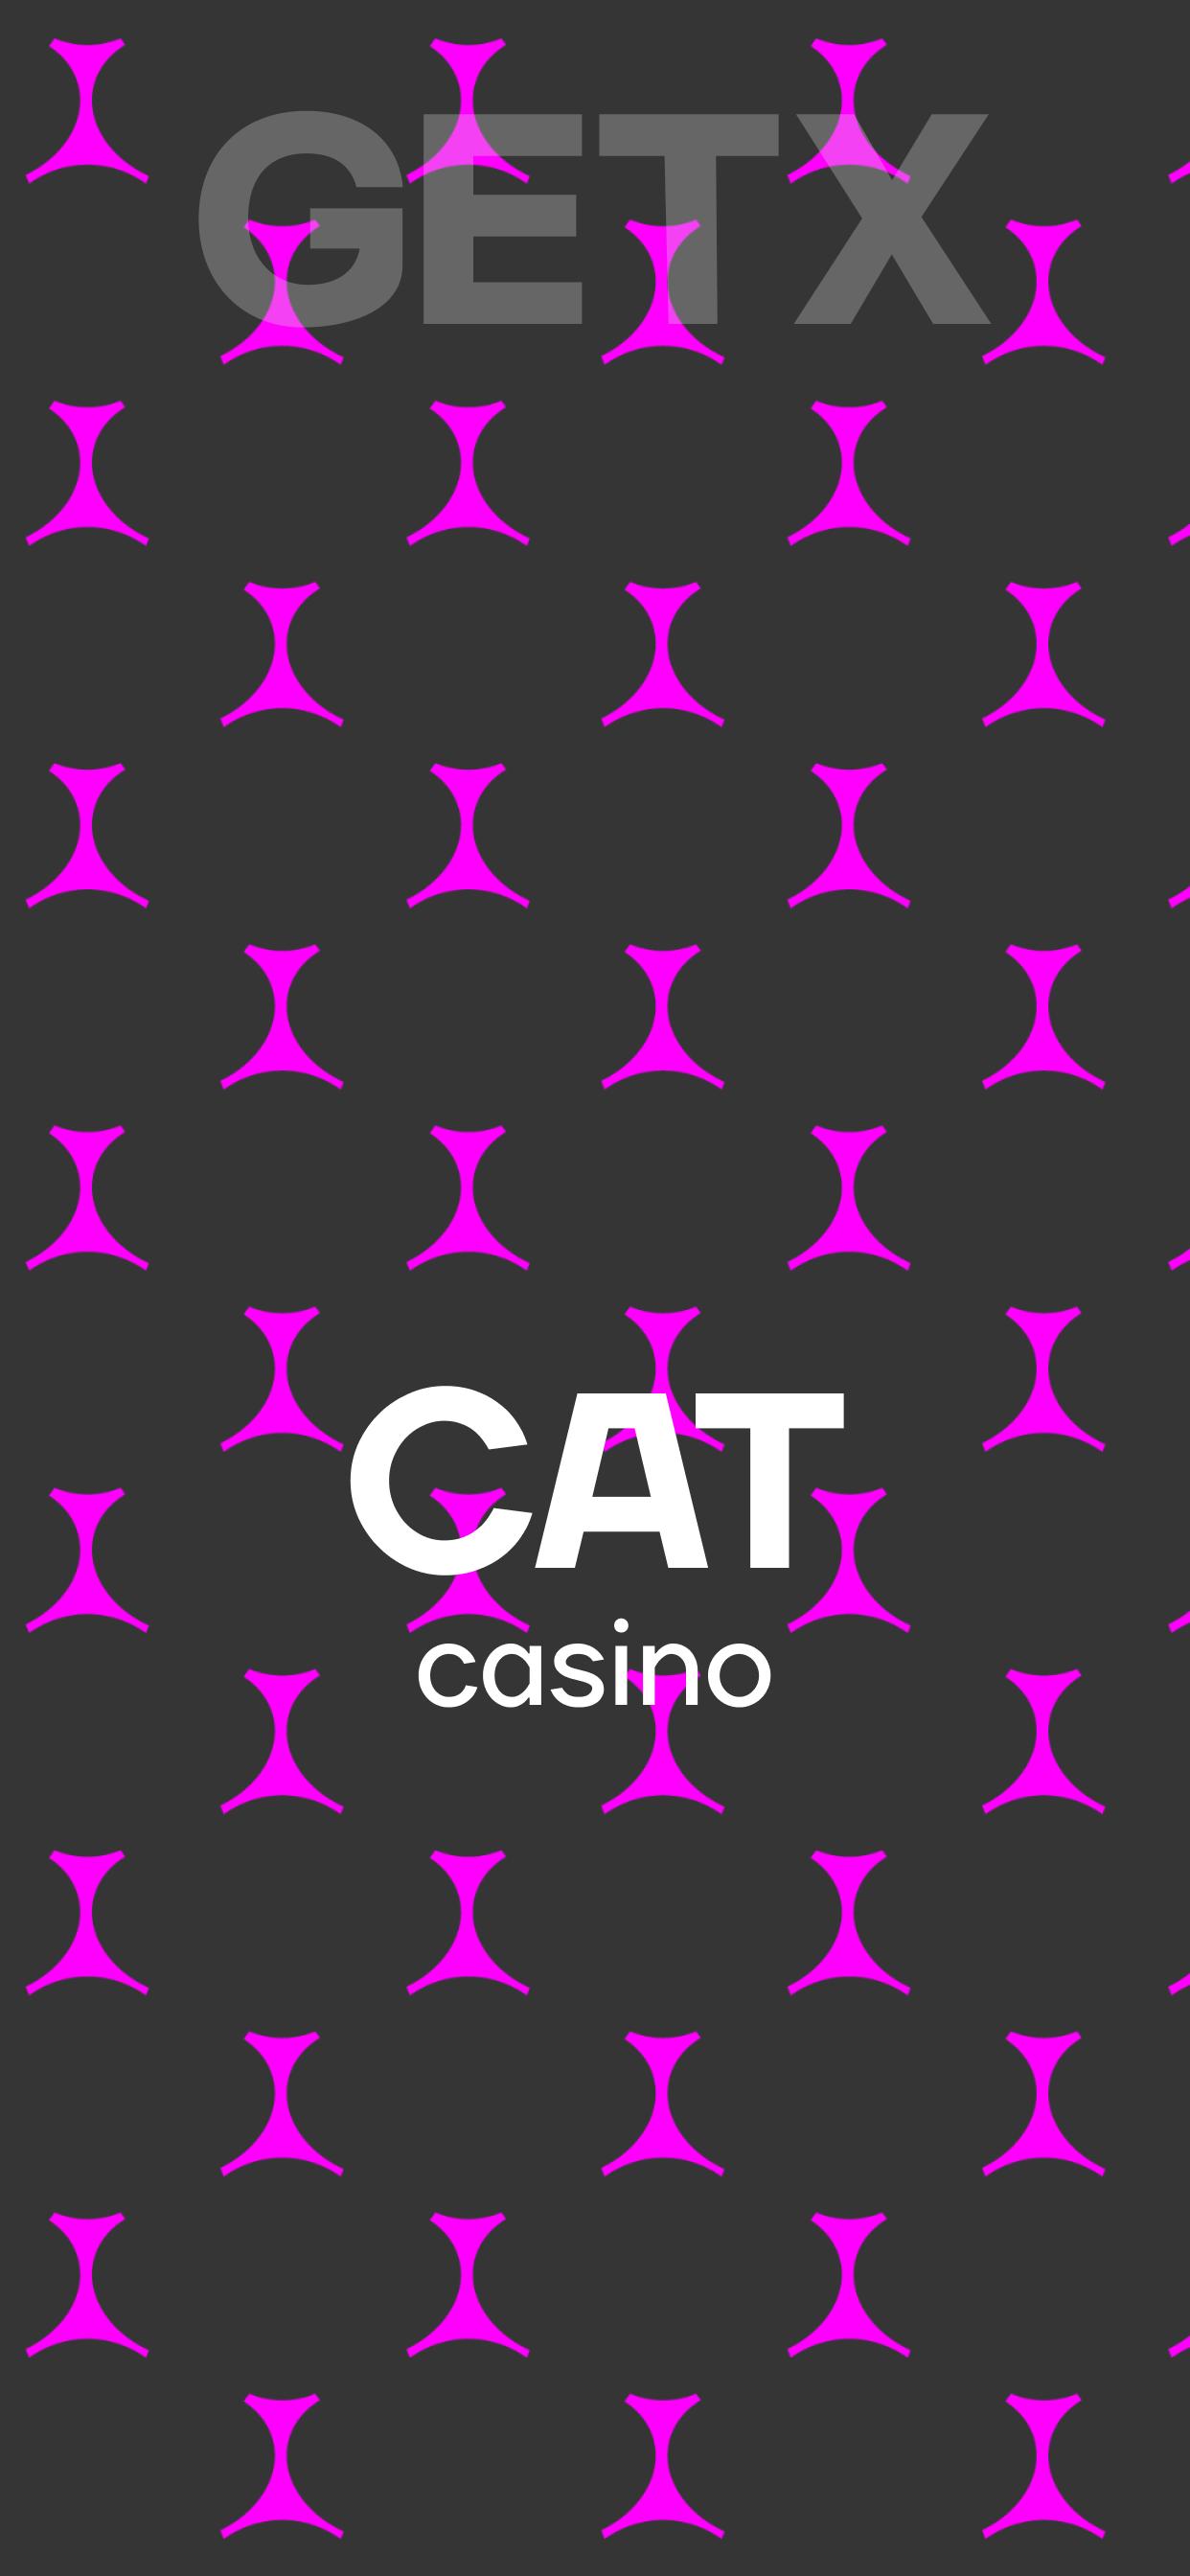 Cat casino сайт catcasino kas